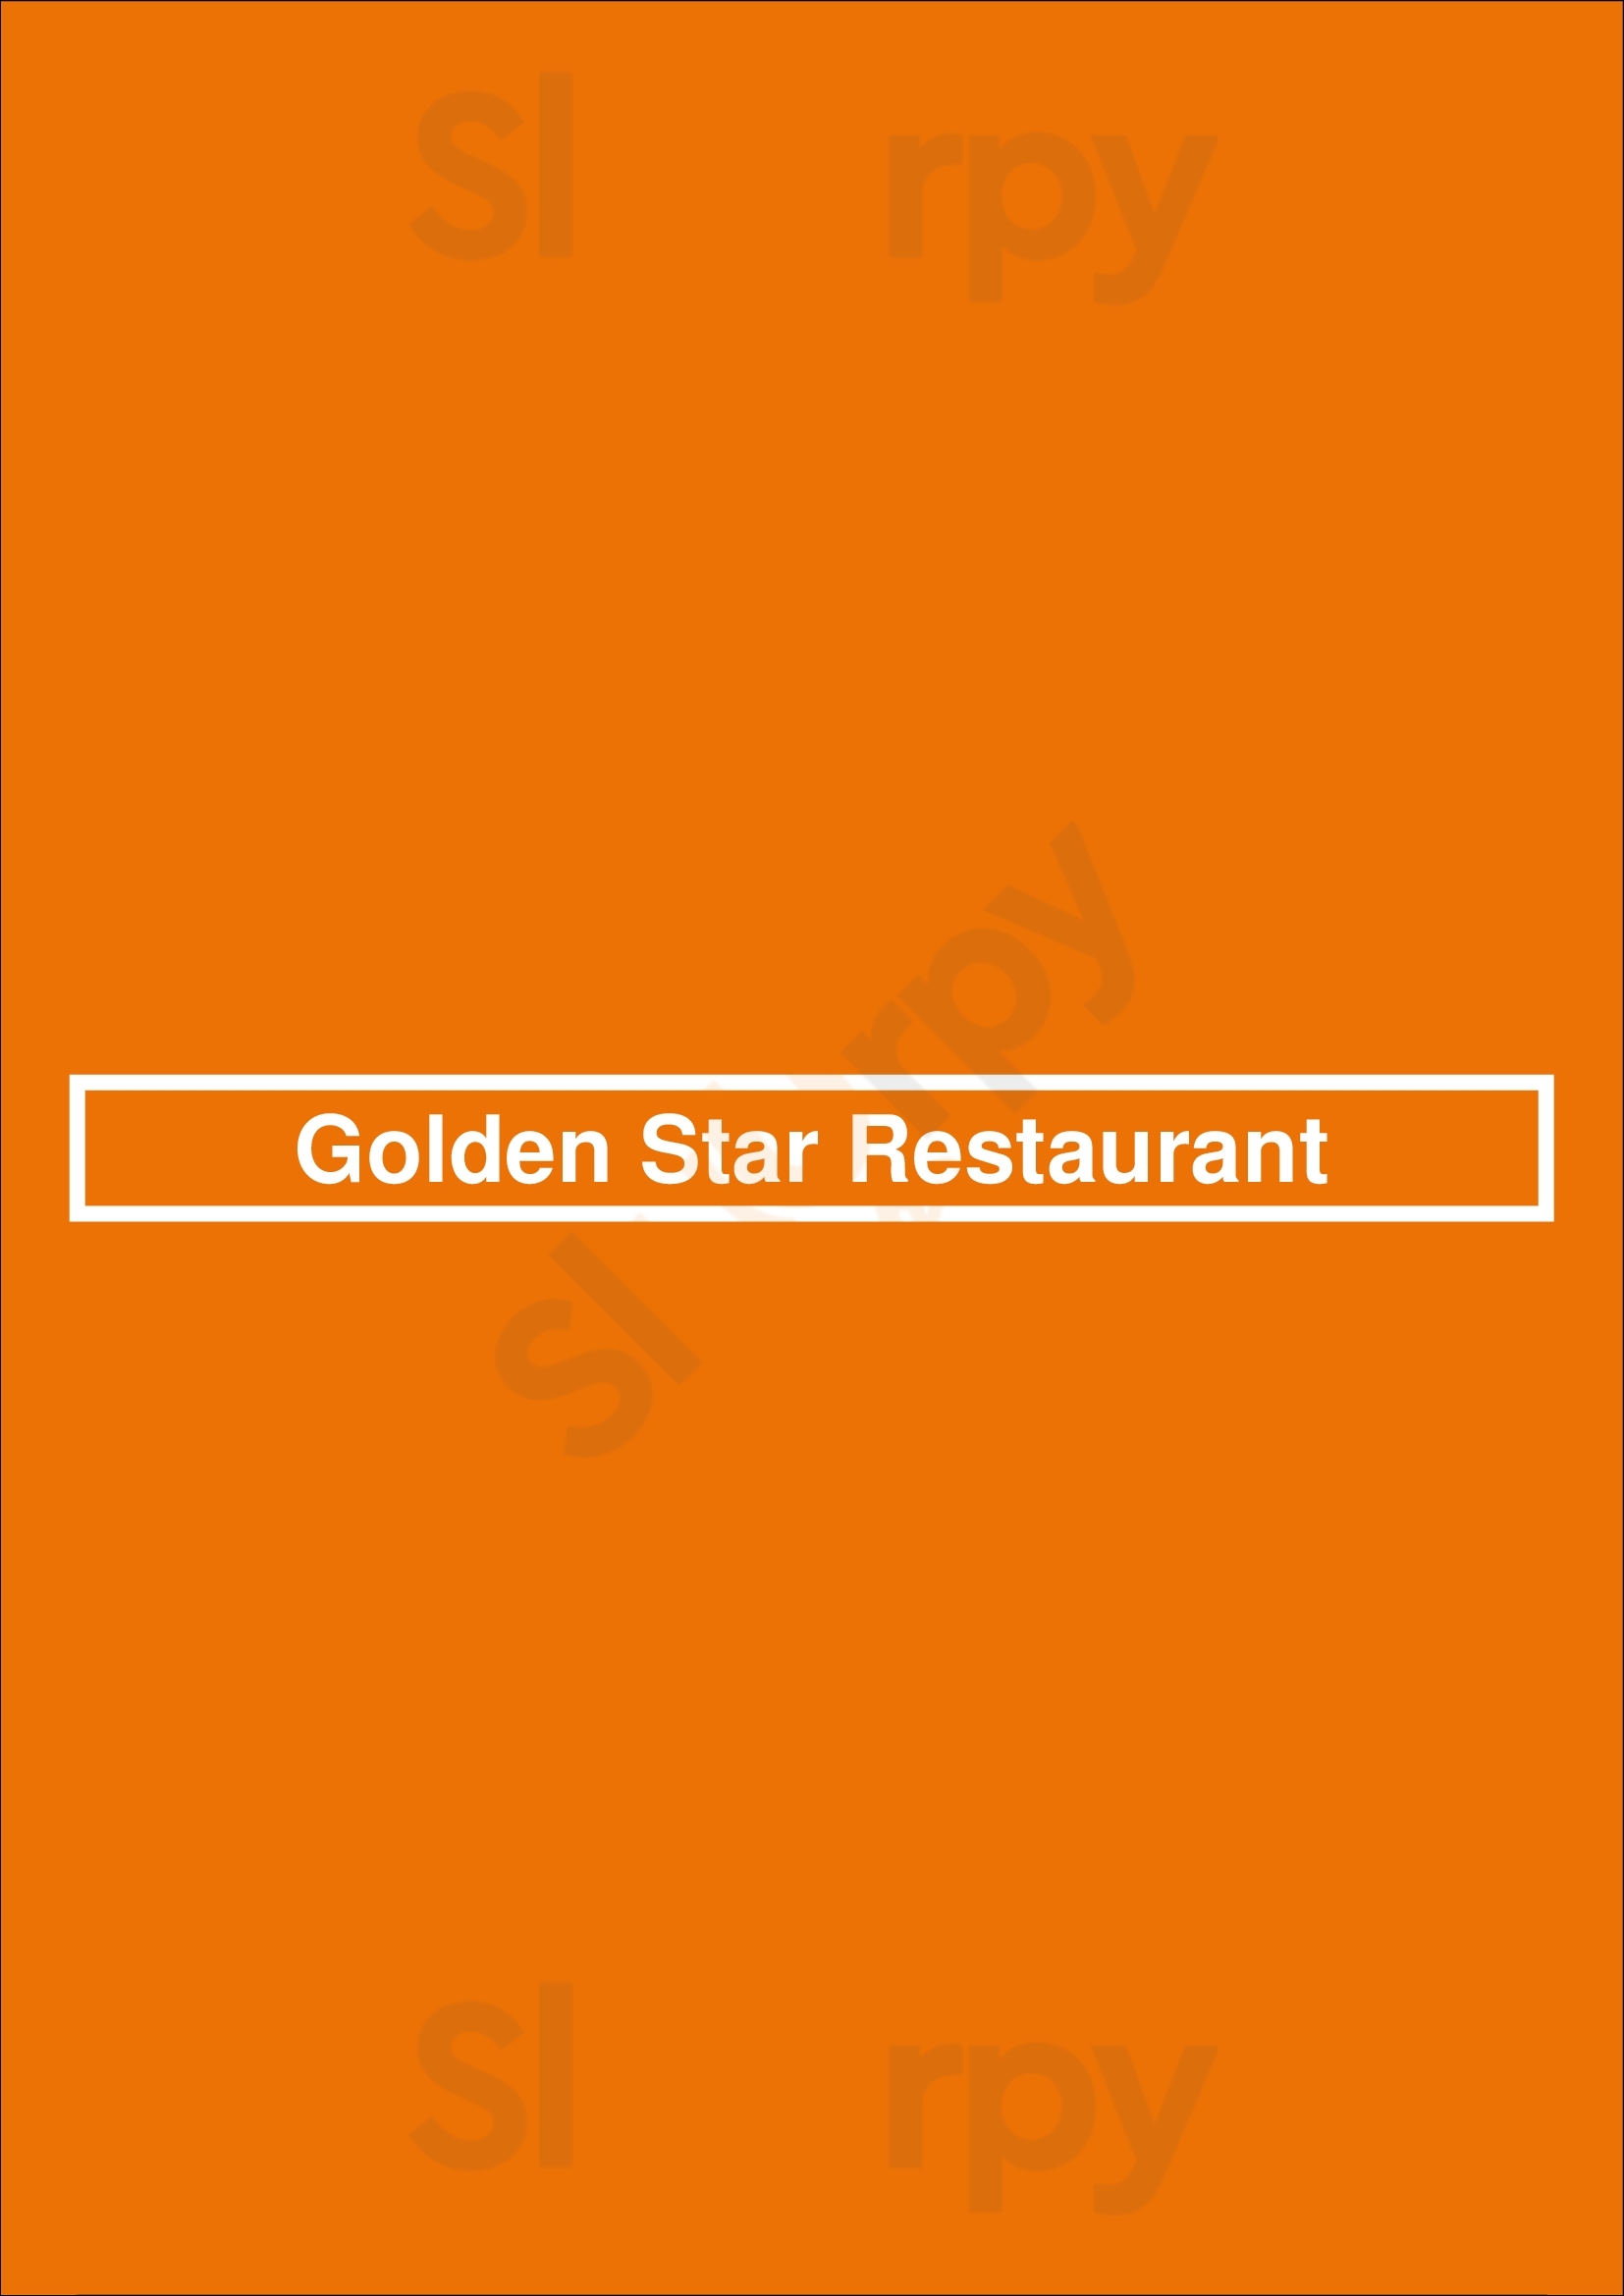 Golden Star Restaurant Brampton Menu - 1